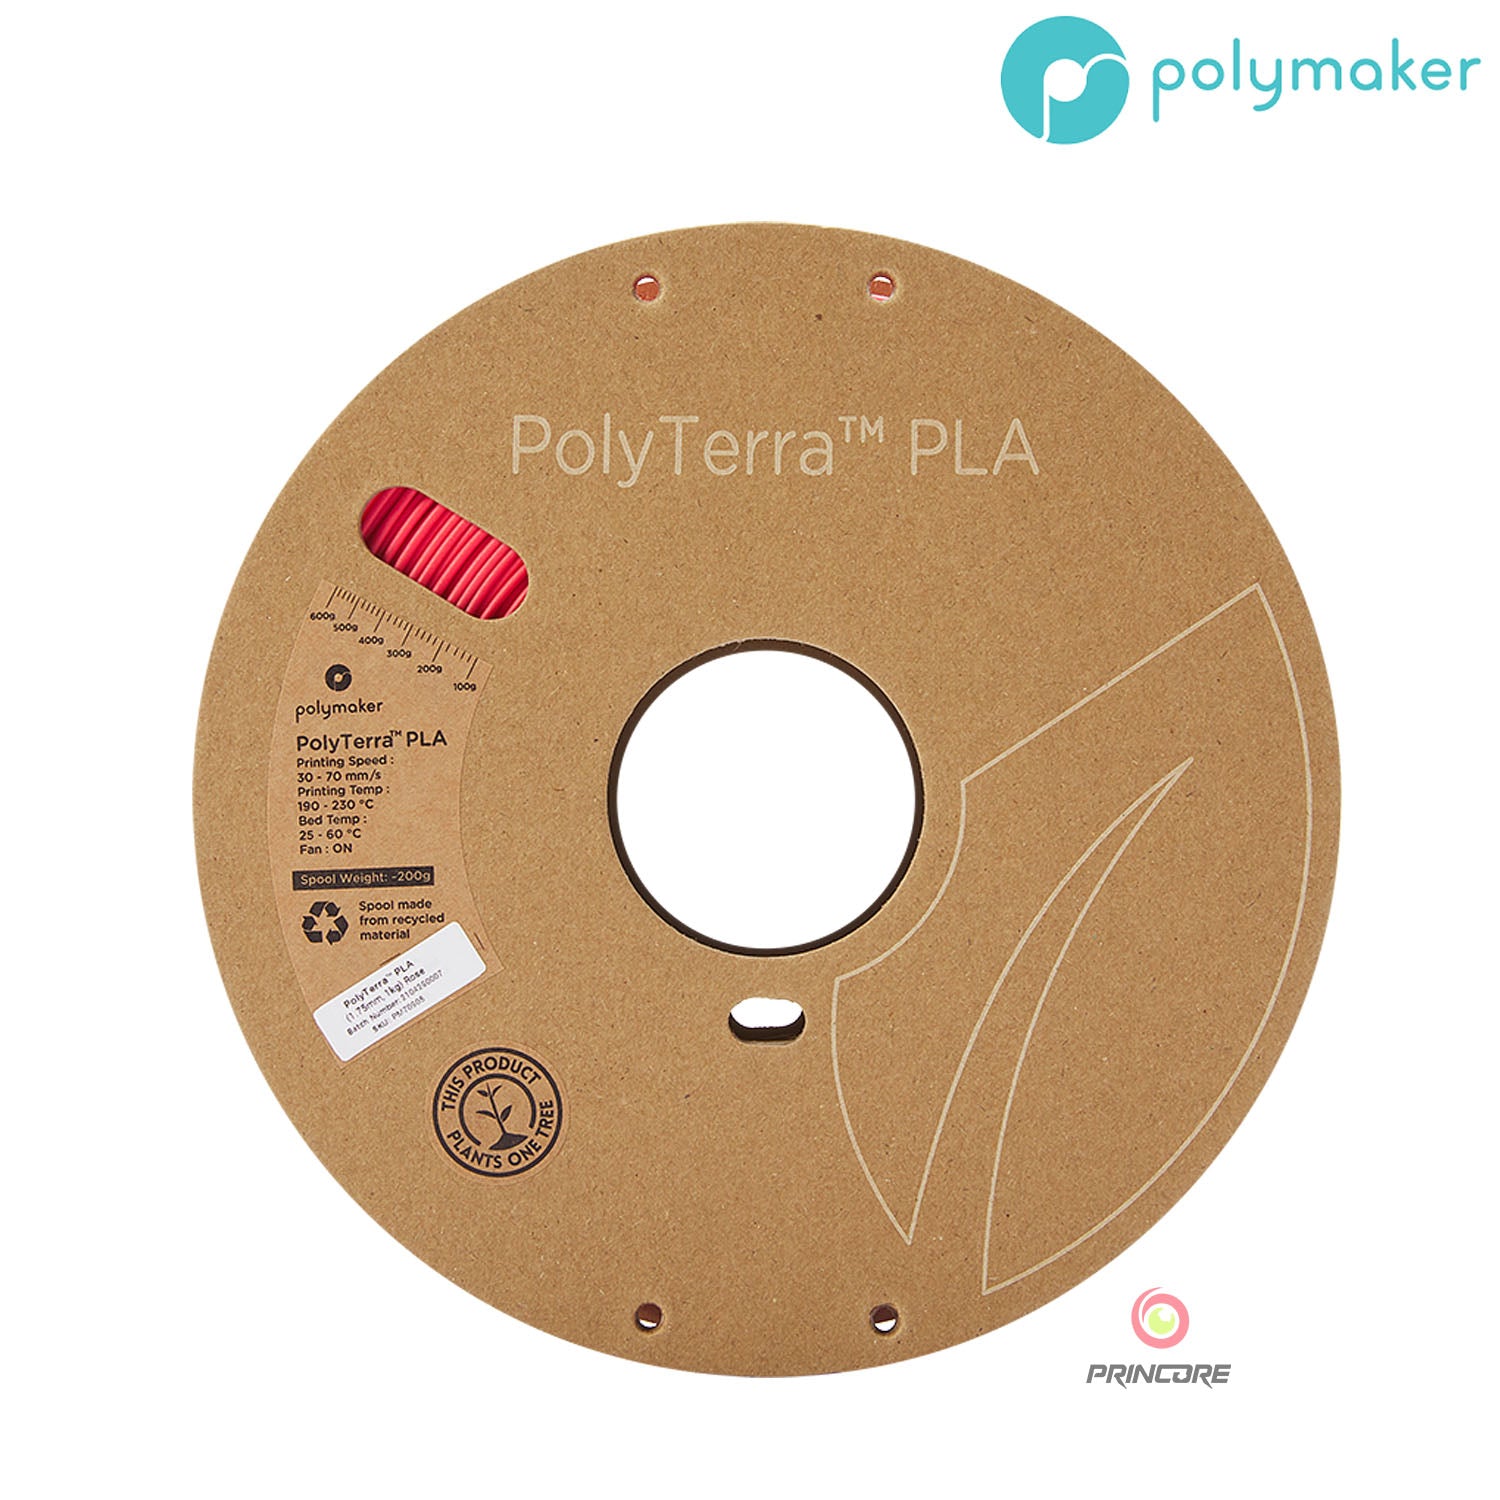 Polymaker PolyTerra™ PLA - Rose [1.75mm] (19,90€/Kg)